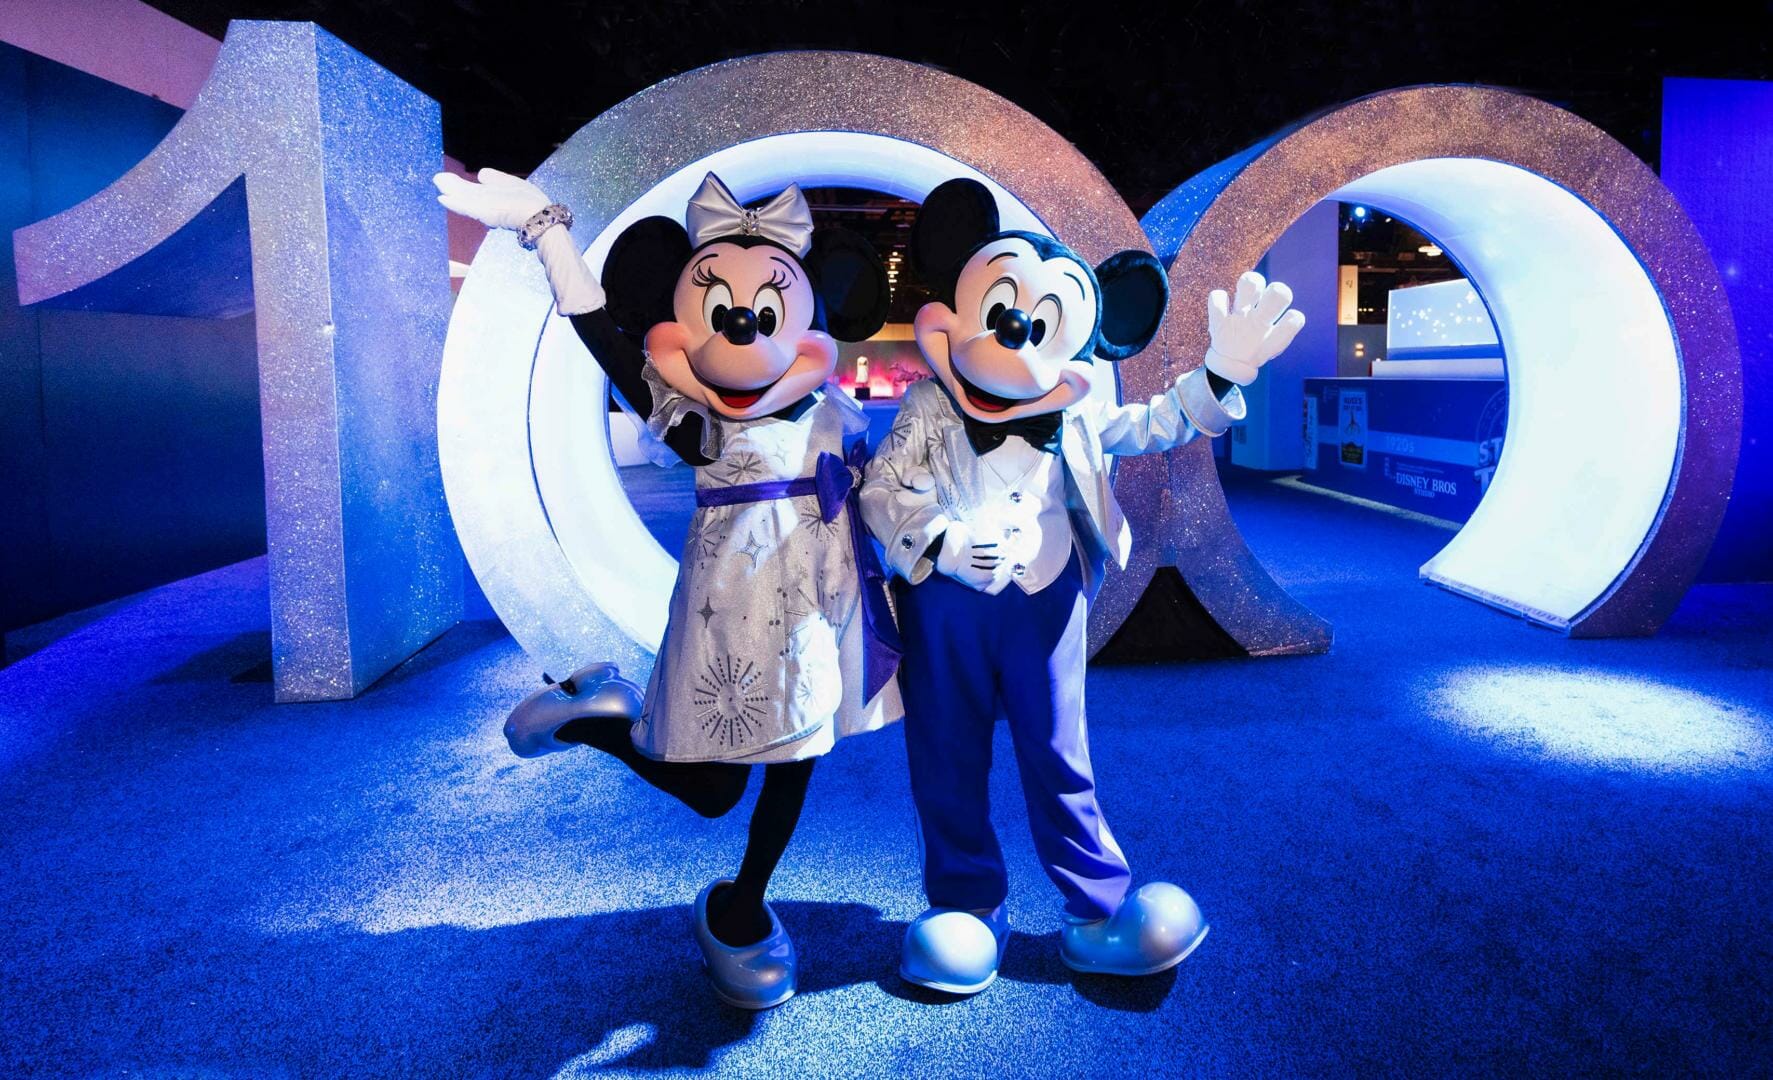 Disney100 Celebration at Disneyland Resort Begins Jan. 27, 2023 Ð Mickey  Mouse, Minnie Mouse and Pals Debut New Platinum Looks - MiceChat